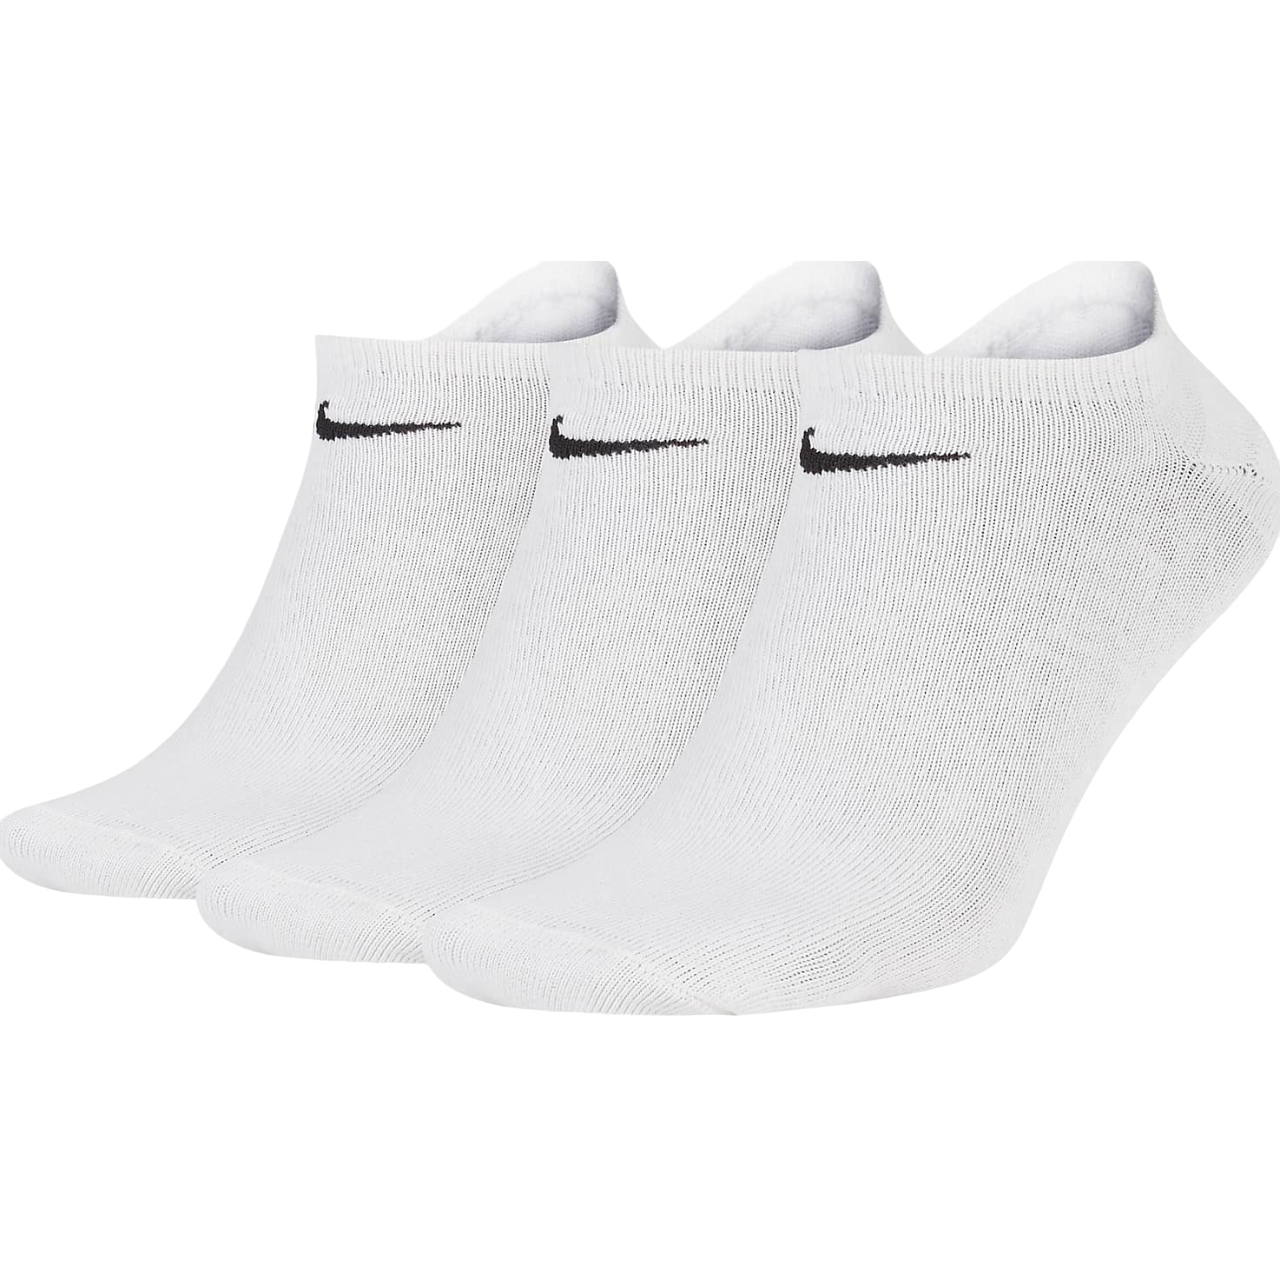 Набор носков Nike Lightweight SX2554-101 L 3 пары белые фото 1